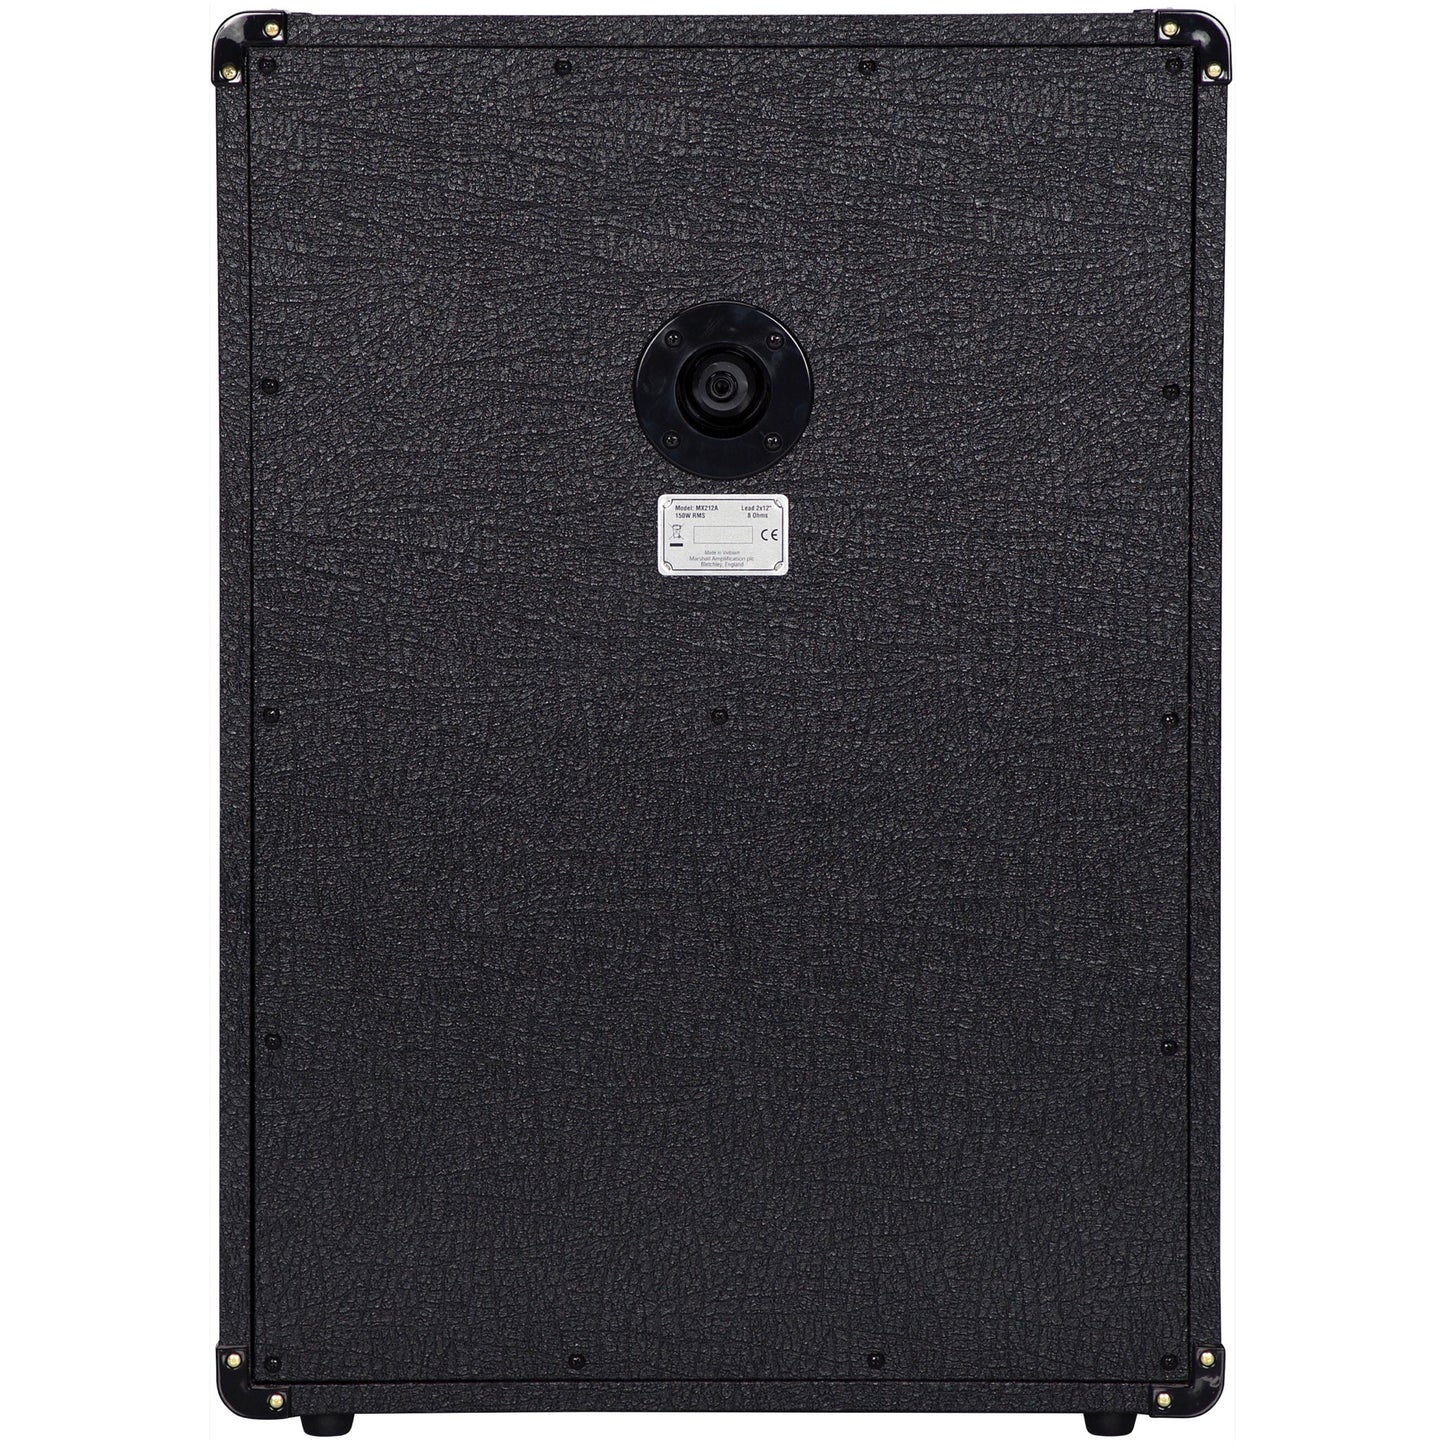 Marshall MX212AR Guitar Speaker Cabinet (2x12 Inch, 160 Watts, 8 Ohms)